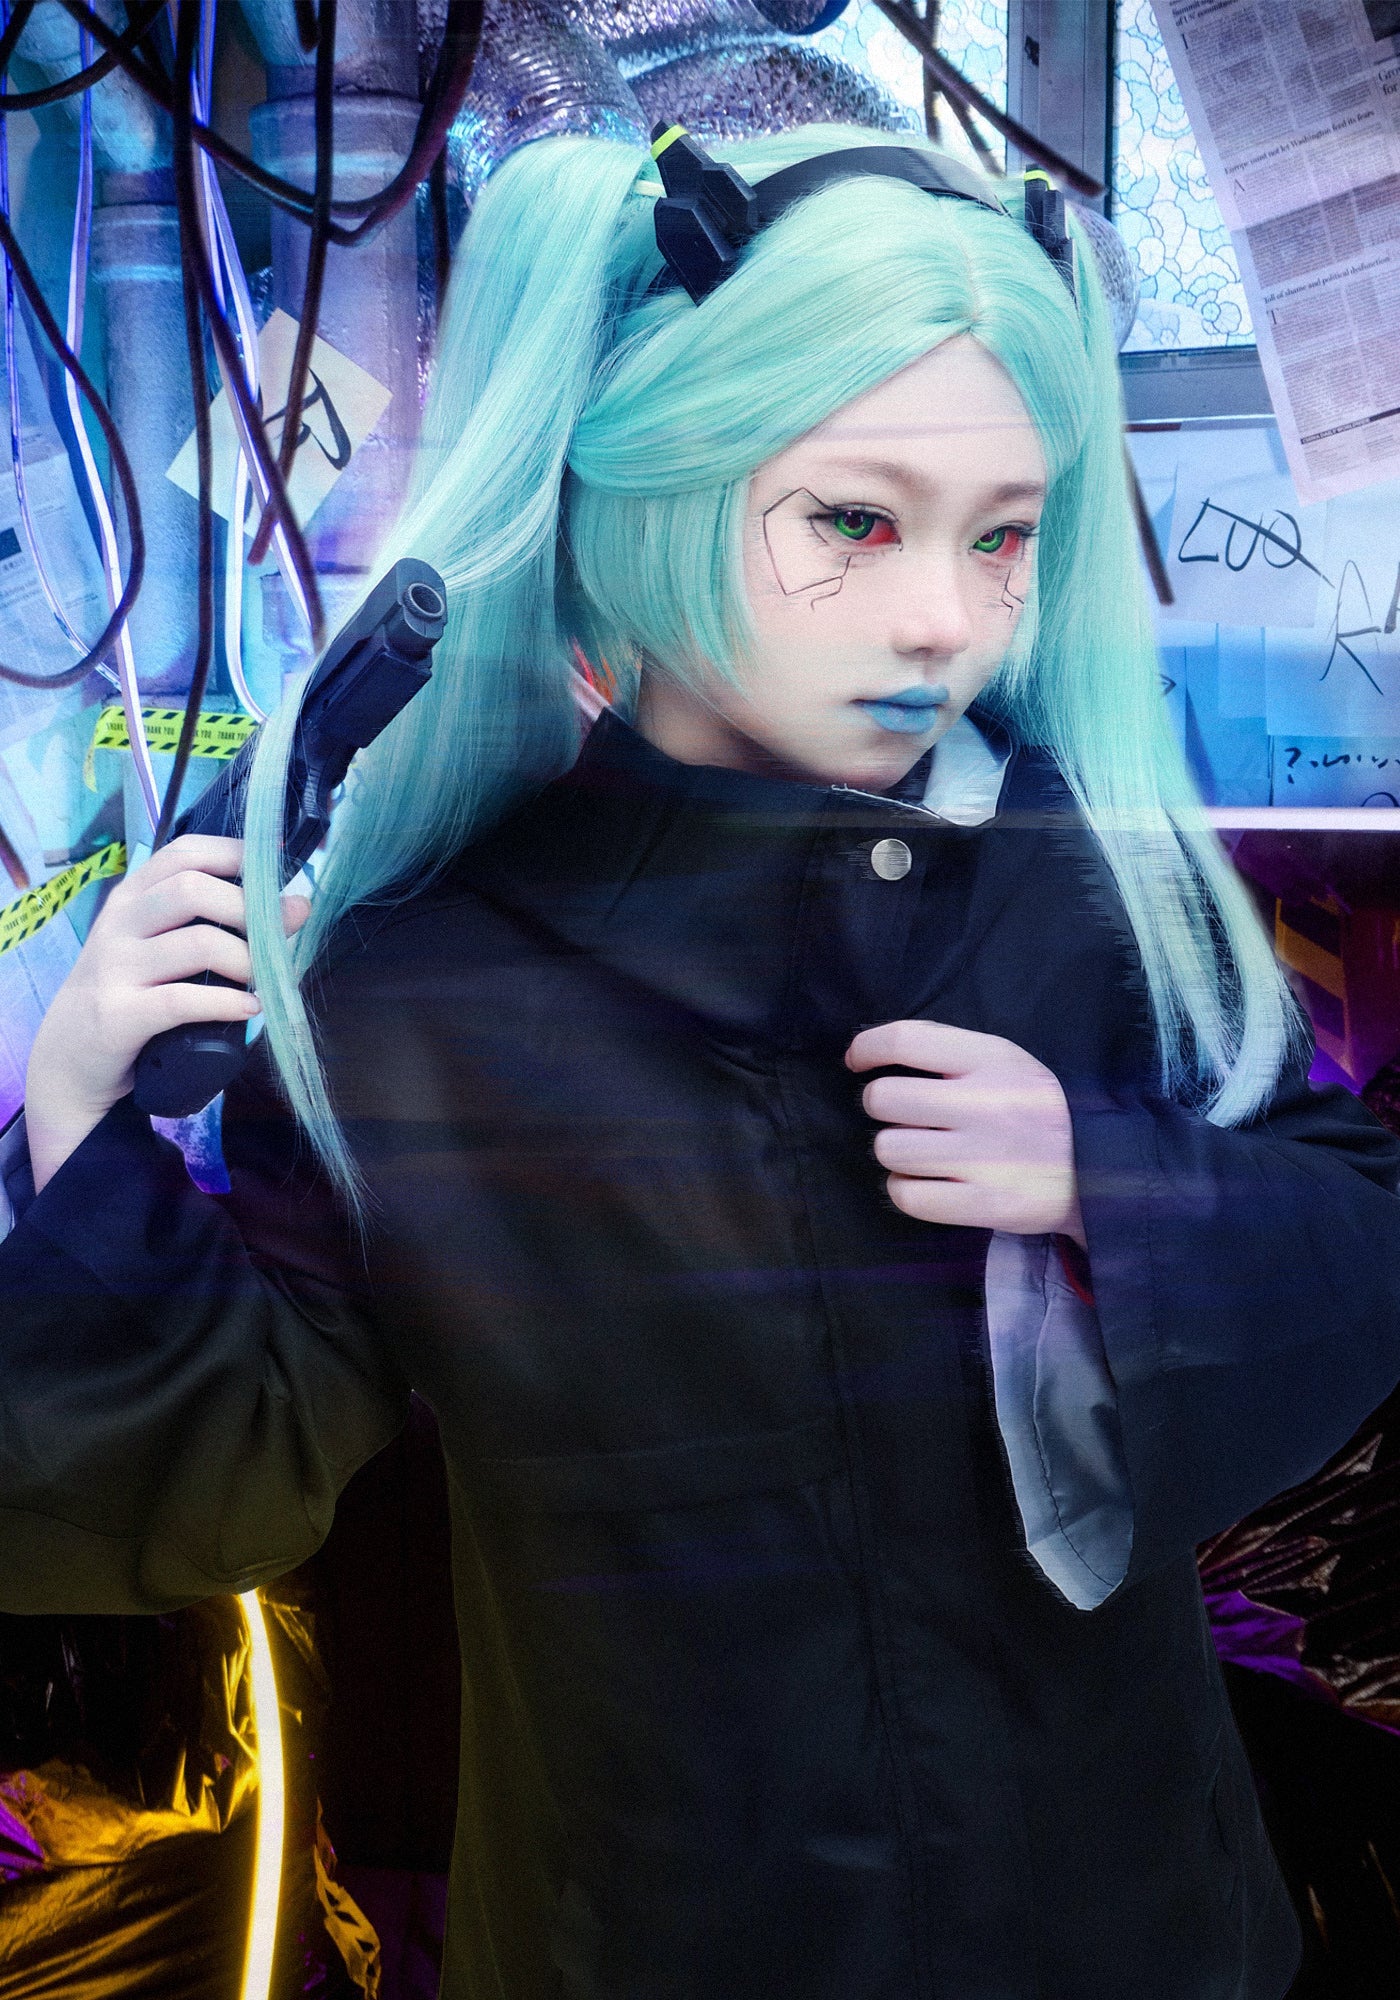 DAZCOS Rebecca Cosplay Wig for Anime Halloween Costume Green